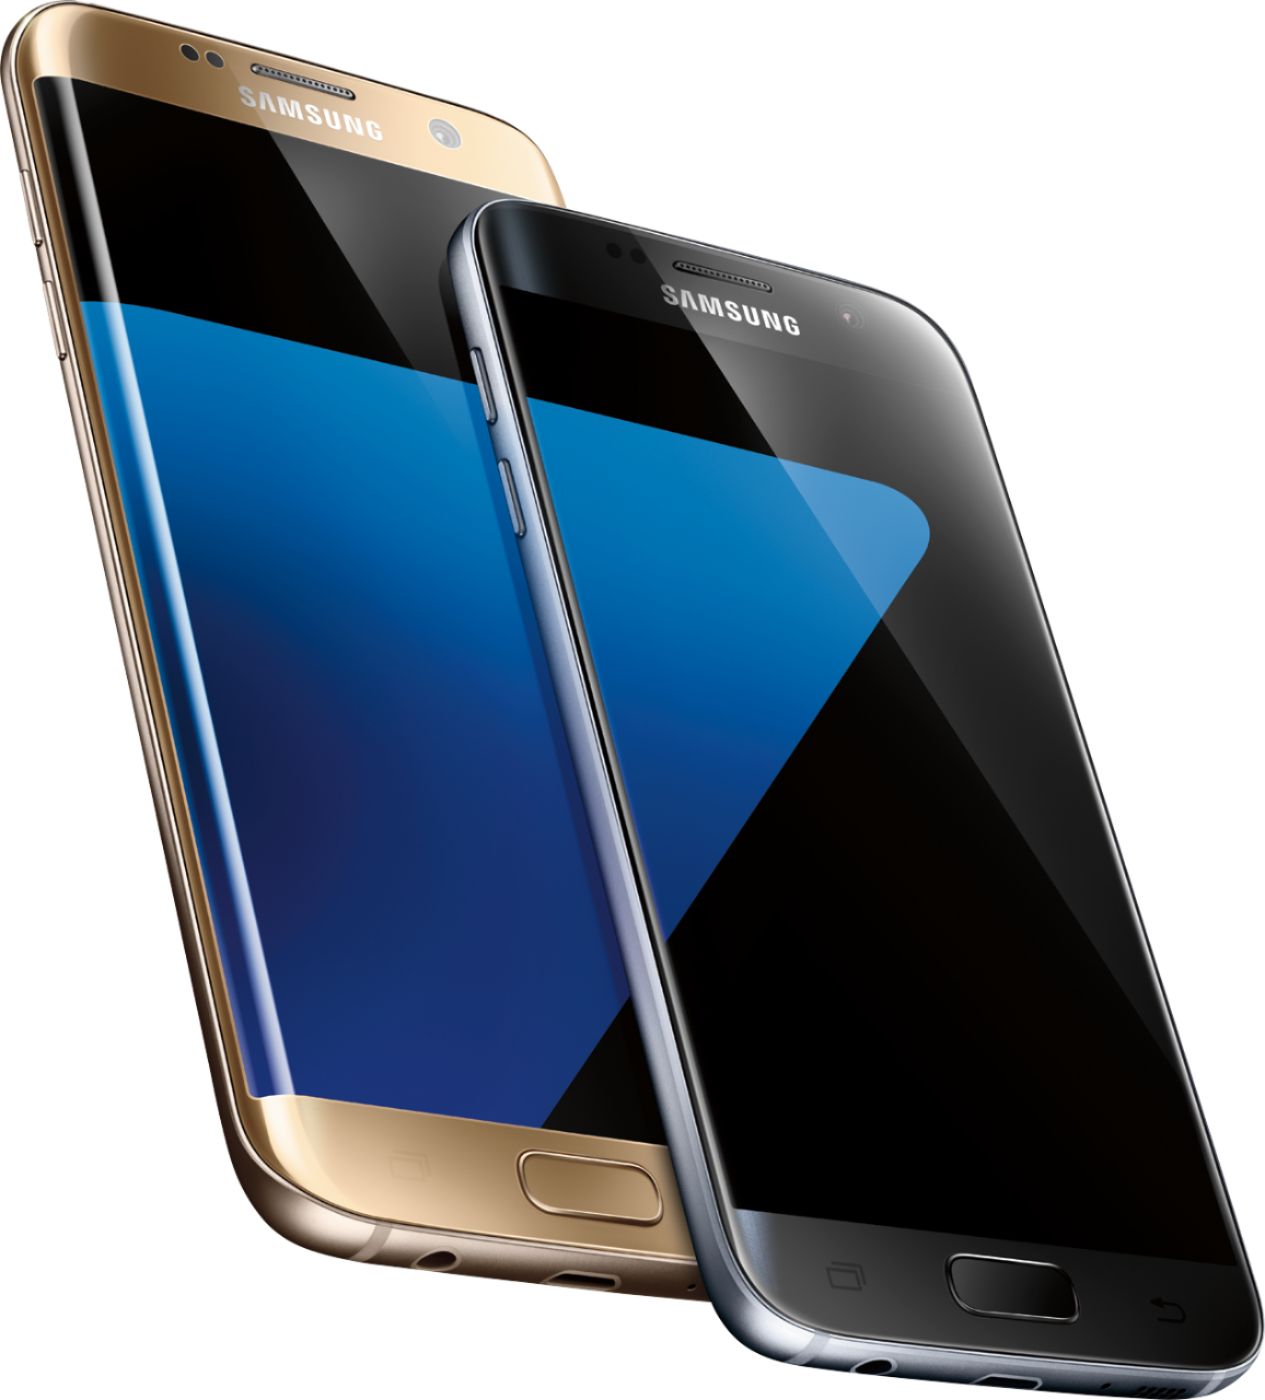 Customer Reviews Samsung Galaxy S7 4g Lte With 32gb Memory Cell Phone Unlocked Black Onyx Sm